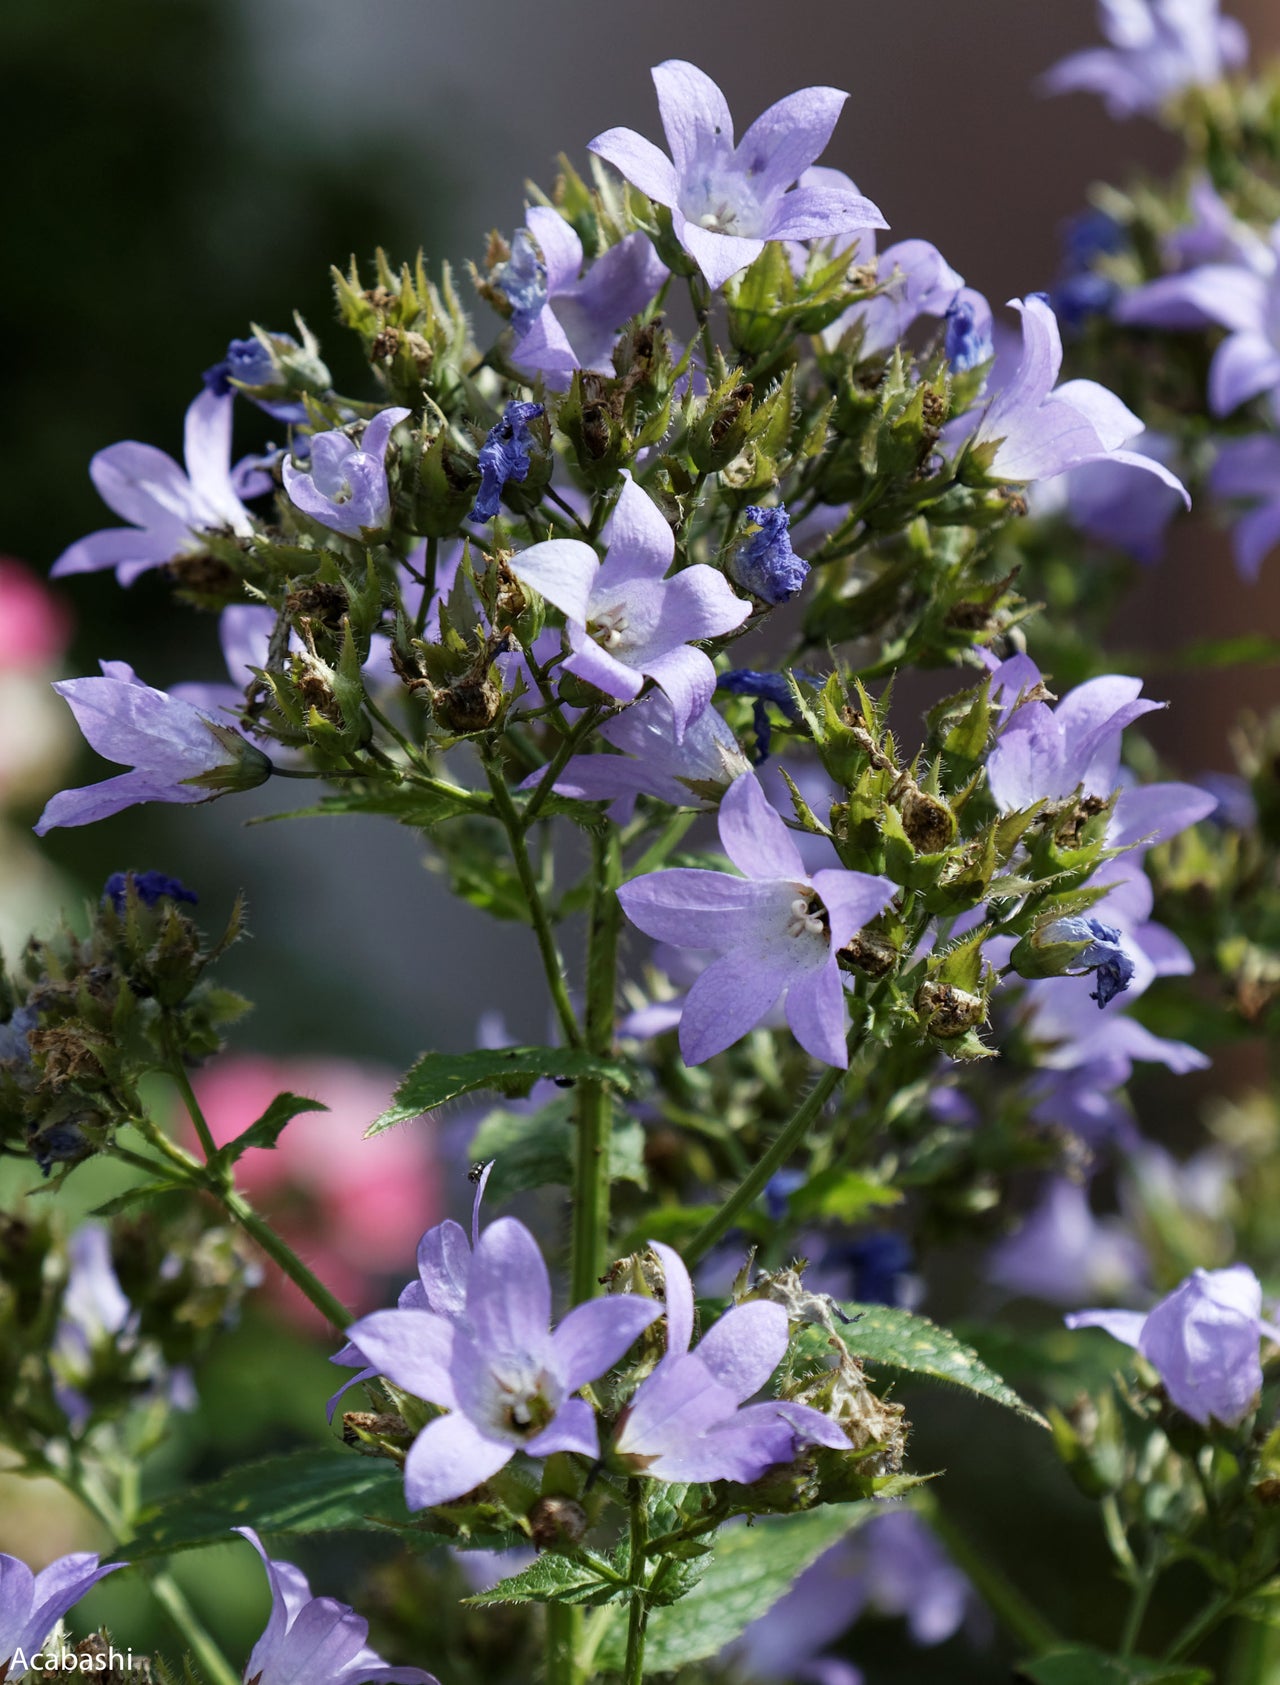 Campanula lactiflora 'Prichard's Variety' Bellflower